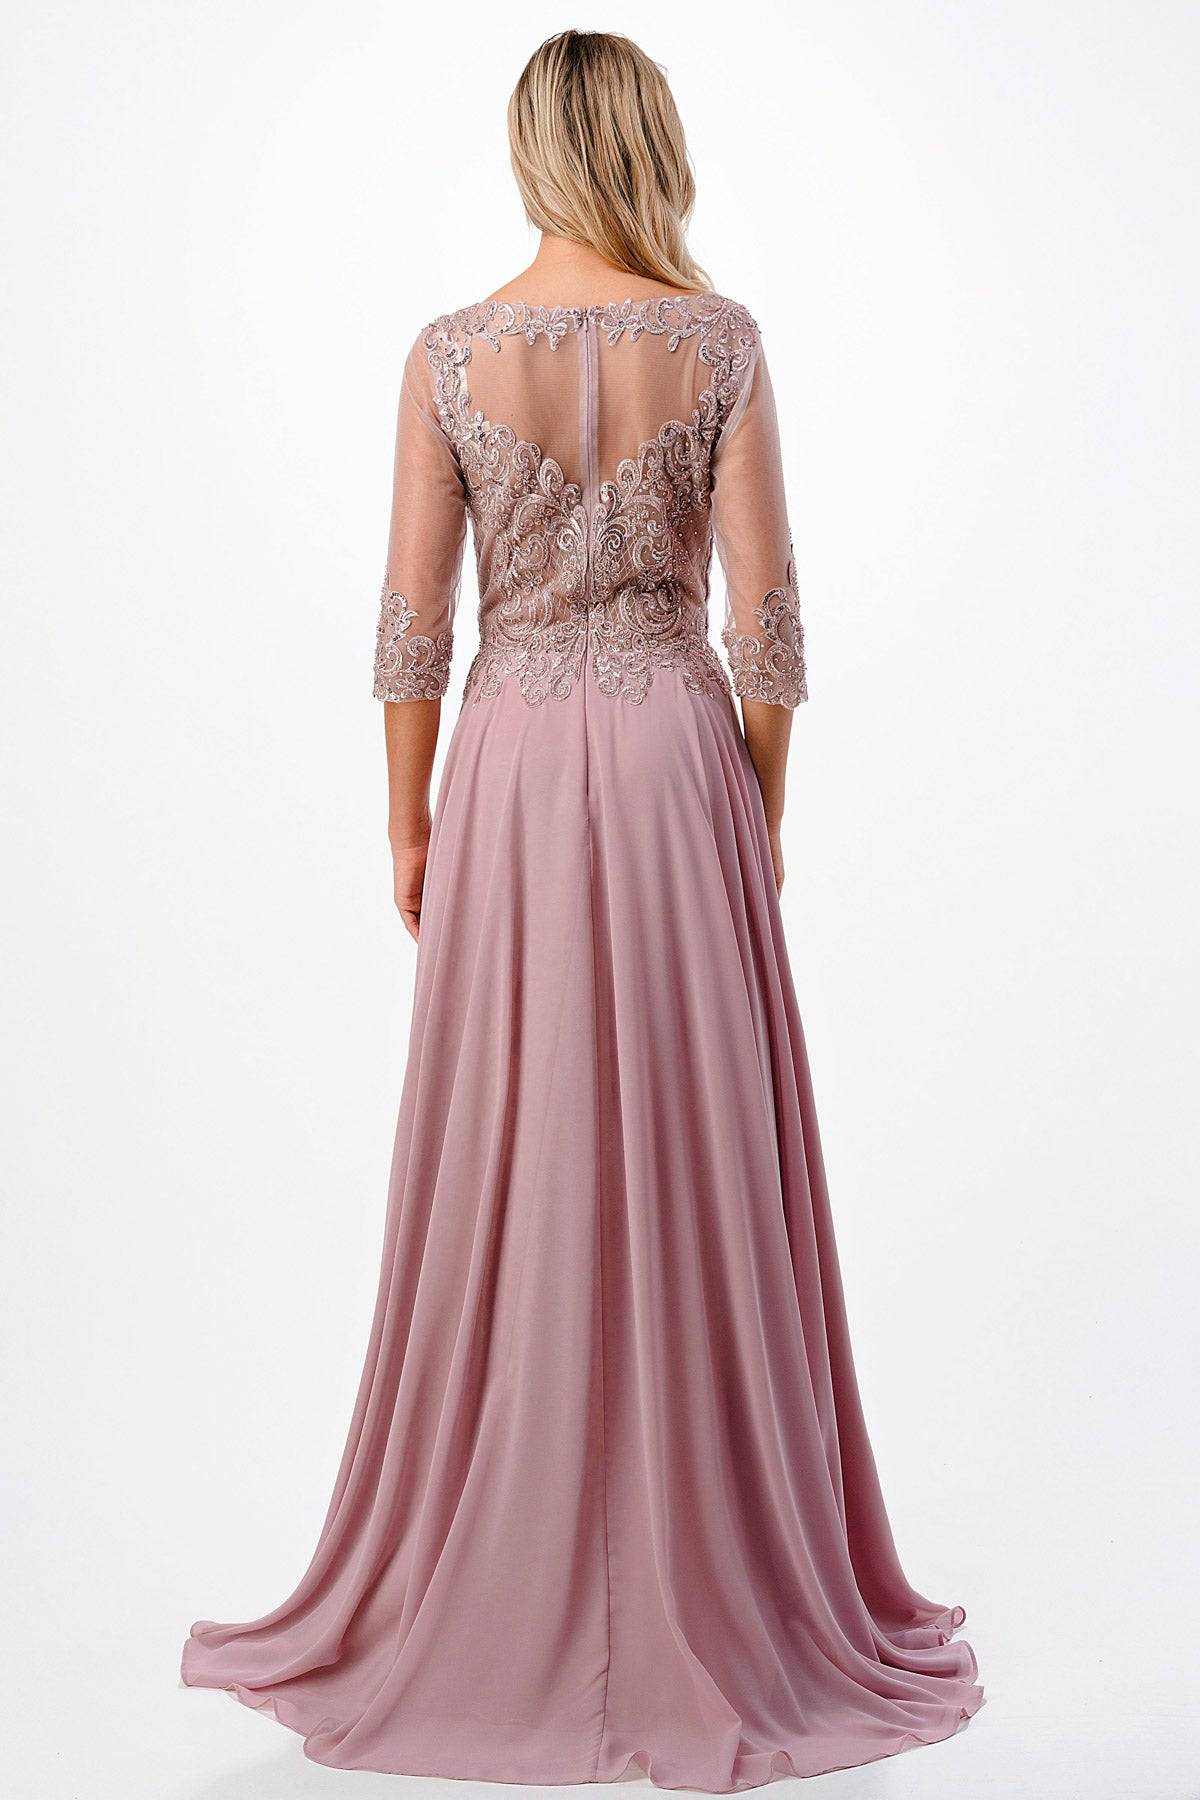 Aspeed M2722 Half Sleeve Lace & Sequin Chiffon Dress